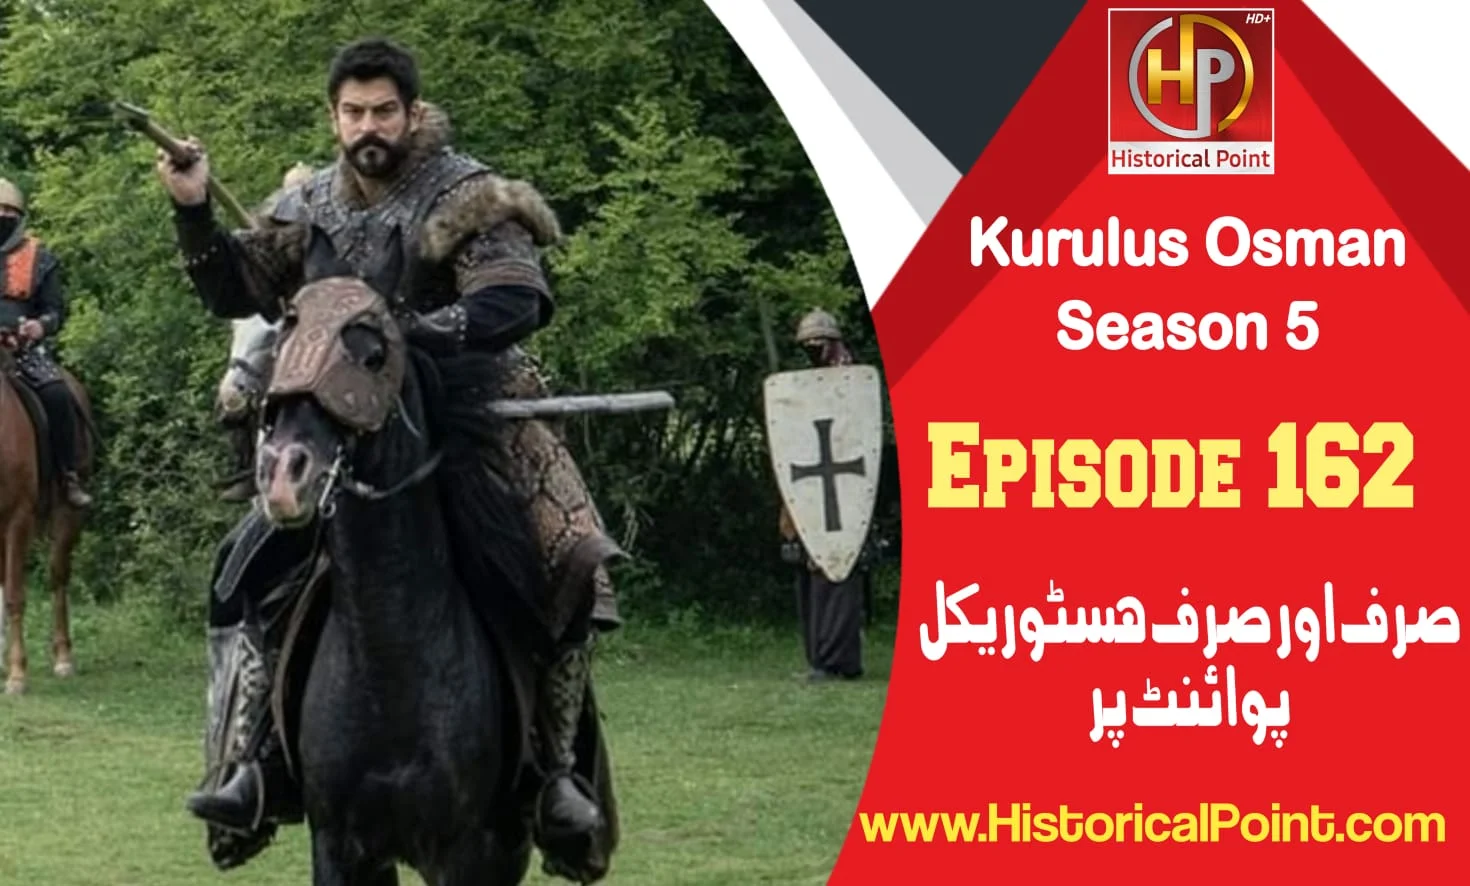 Kurulus Osman Episode 162 in Urdu Subtitles